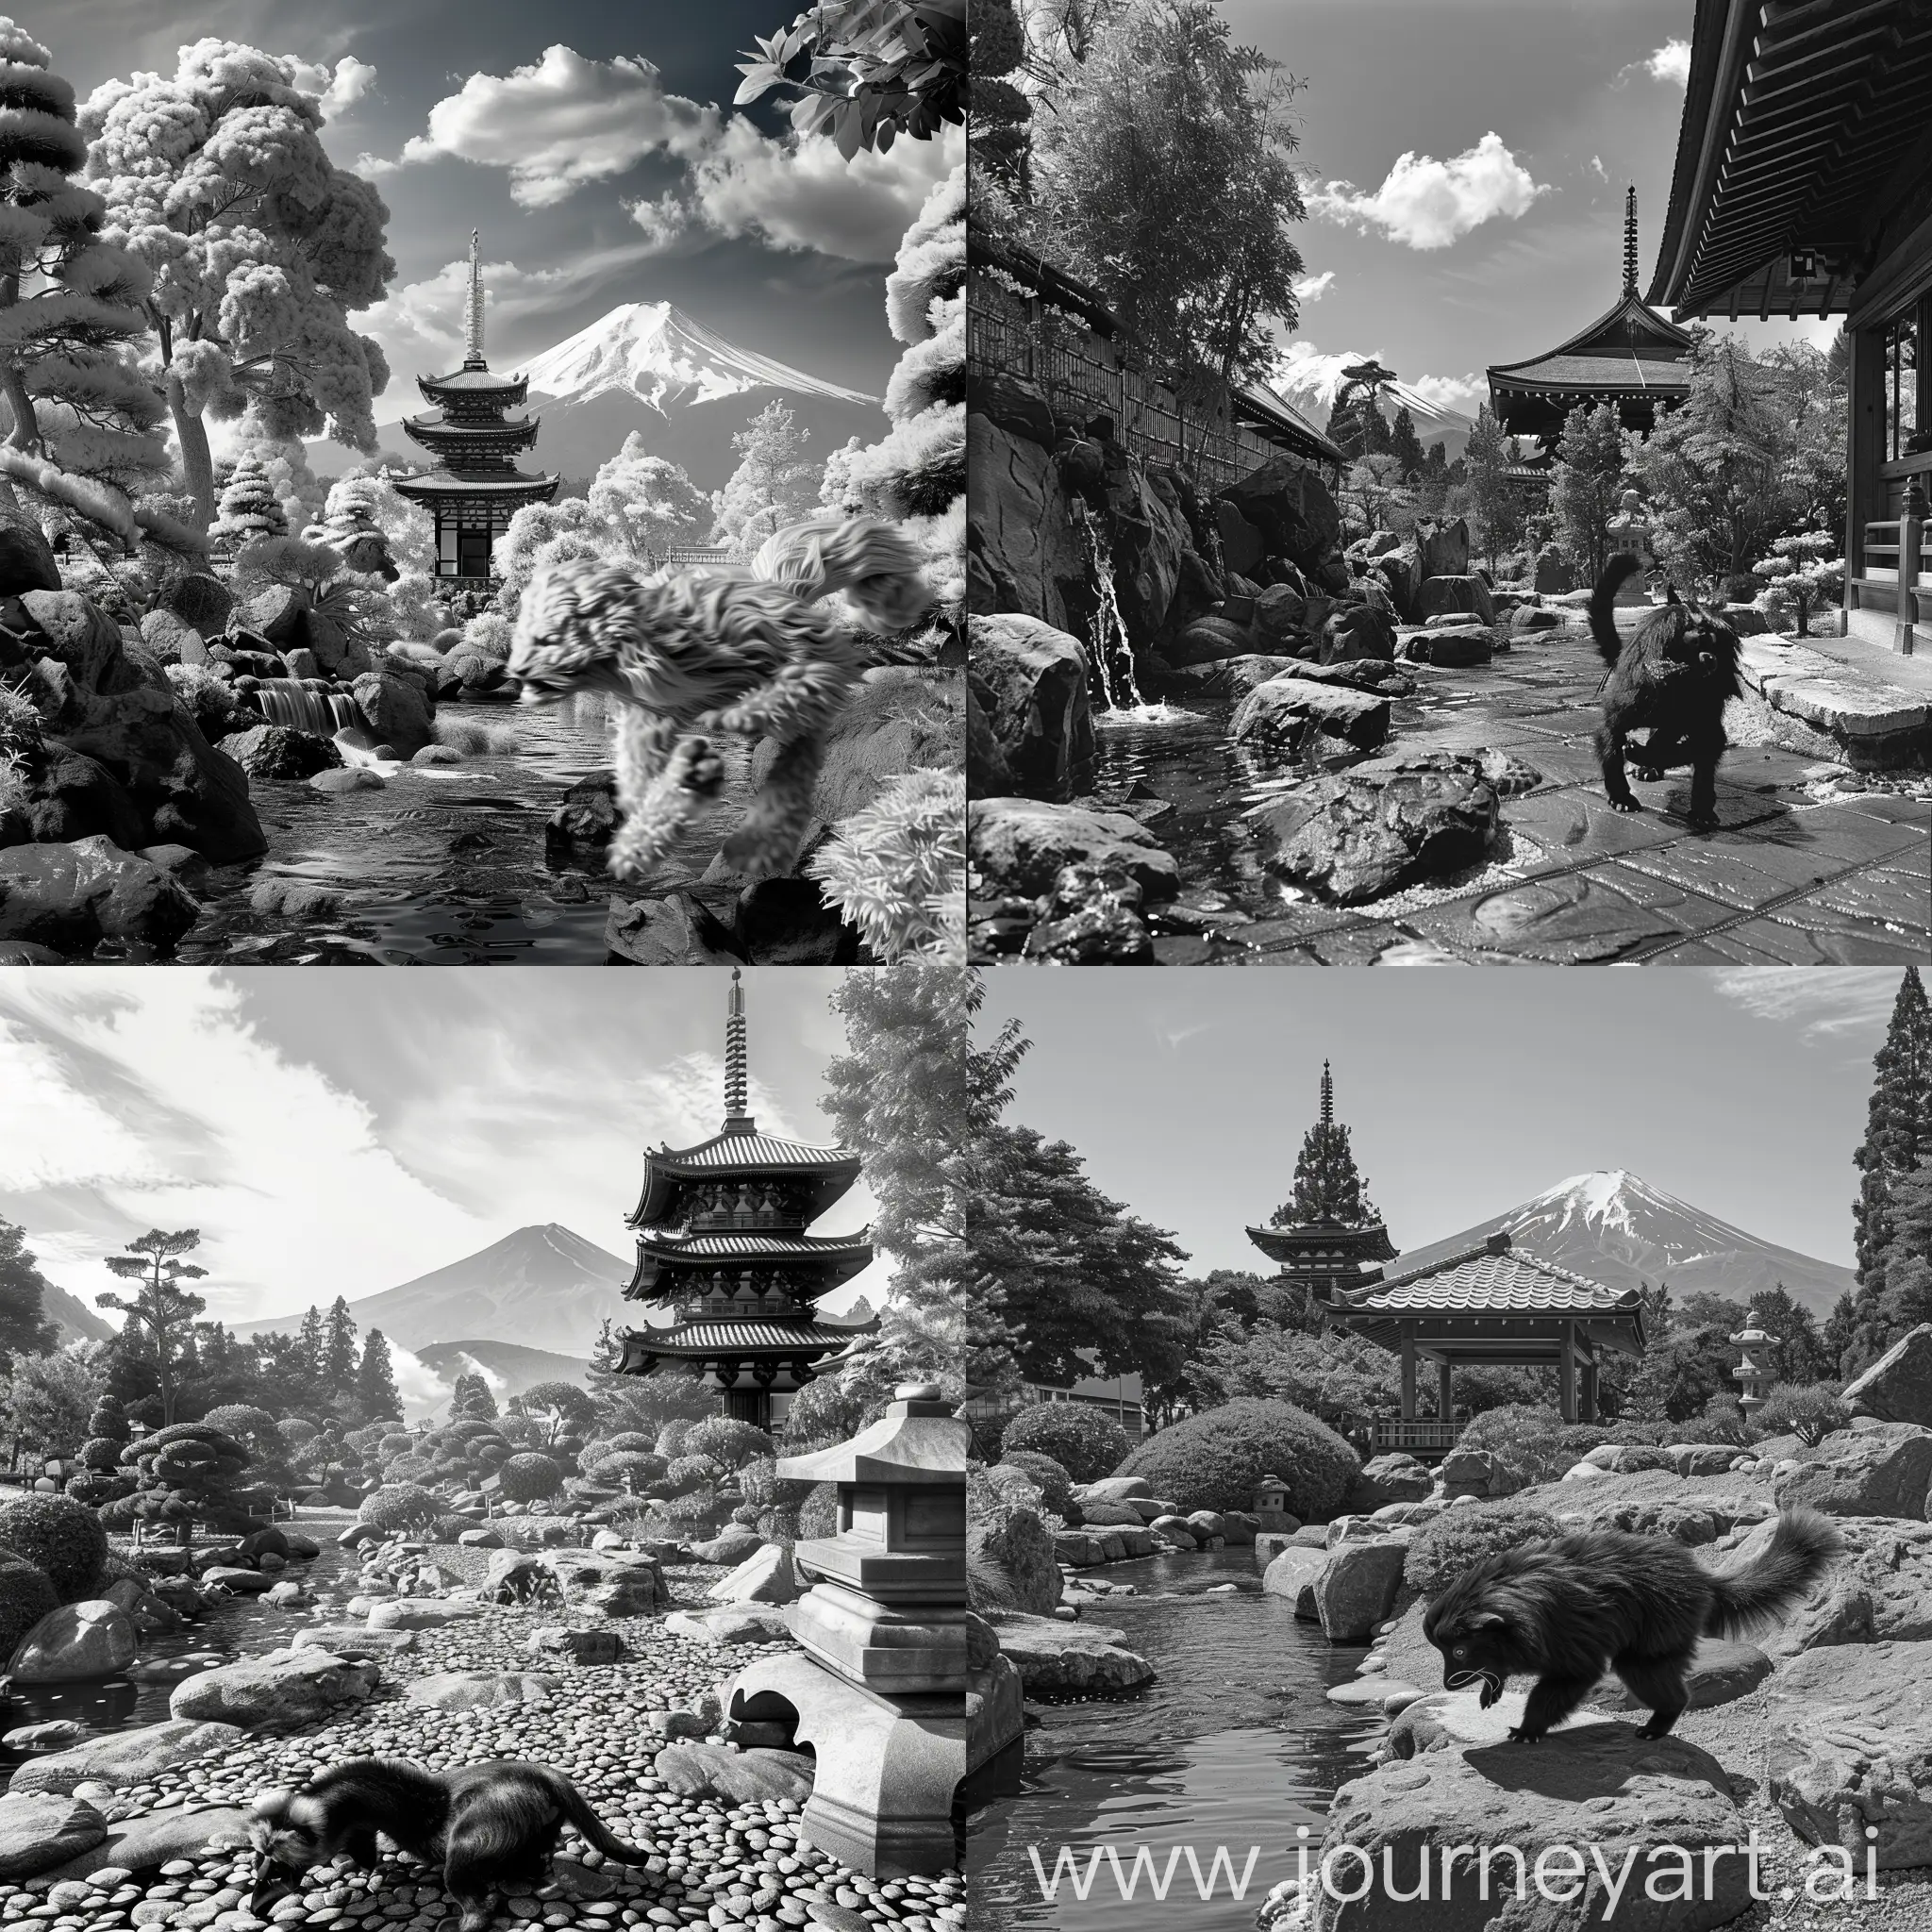 Komainu-Jumping-in-Japanese-Pagoda-Garden-with-Mount-Fuji-Background